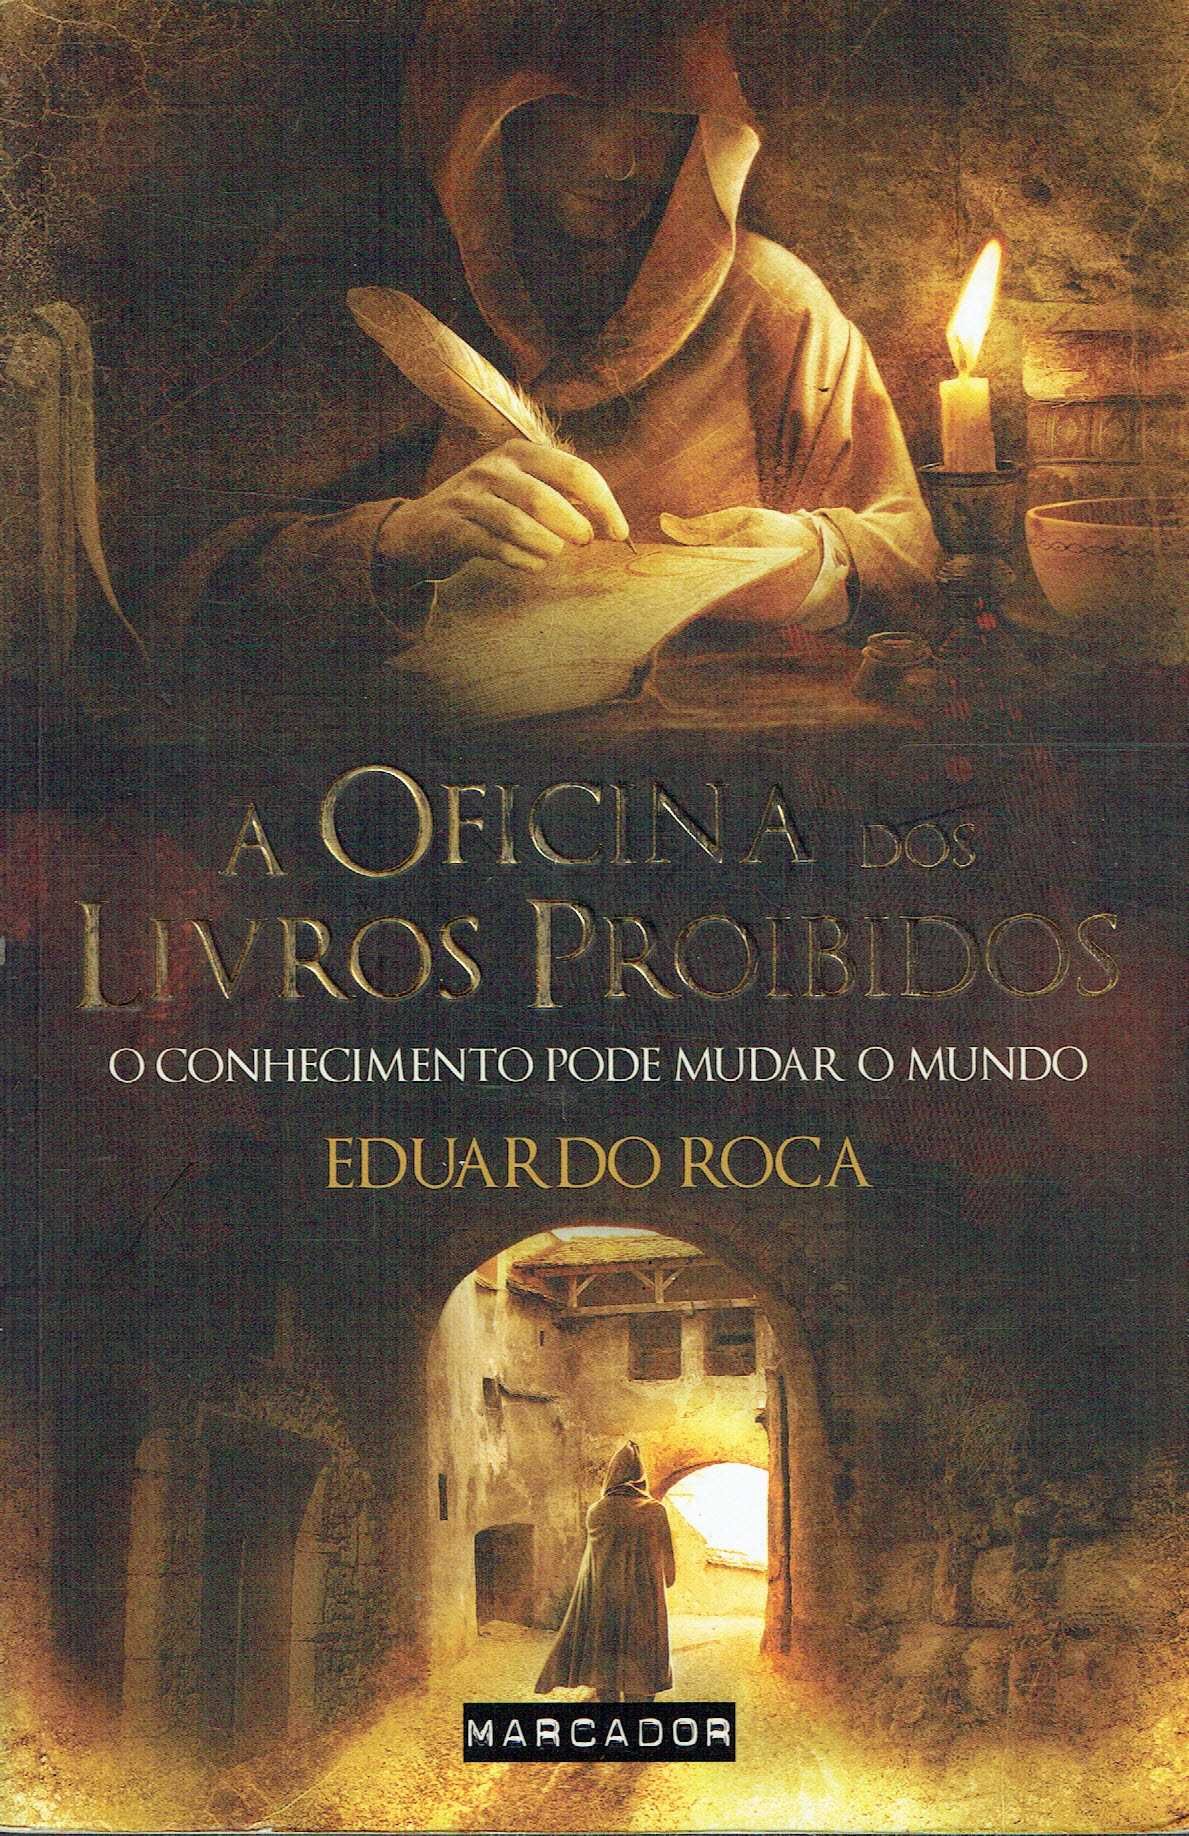 14366

A Oficina dos Livros Proibidos
de Eduardo Roca